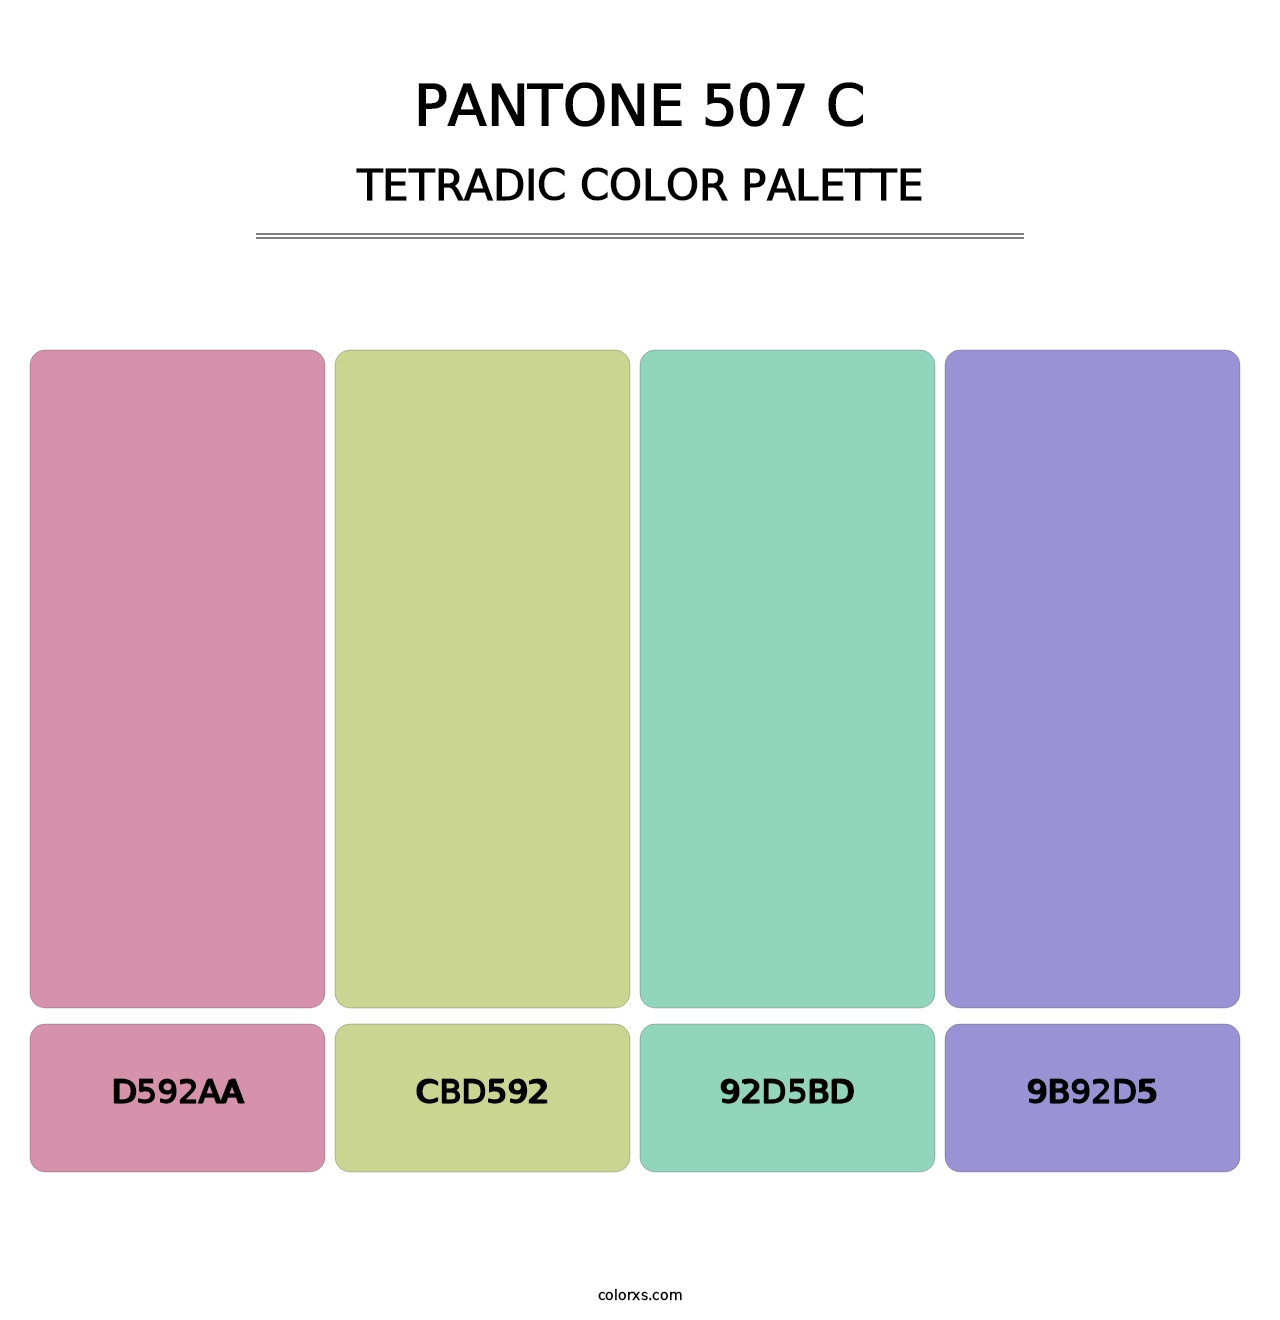 PANTONE 507 C - Tetradic Color Palette